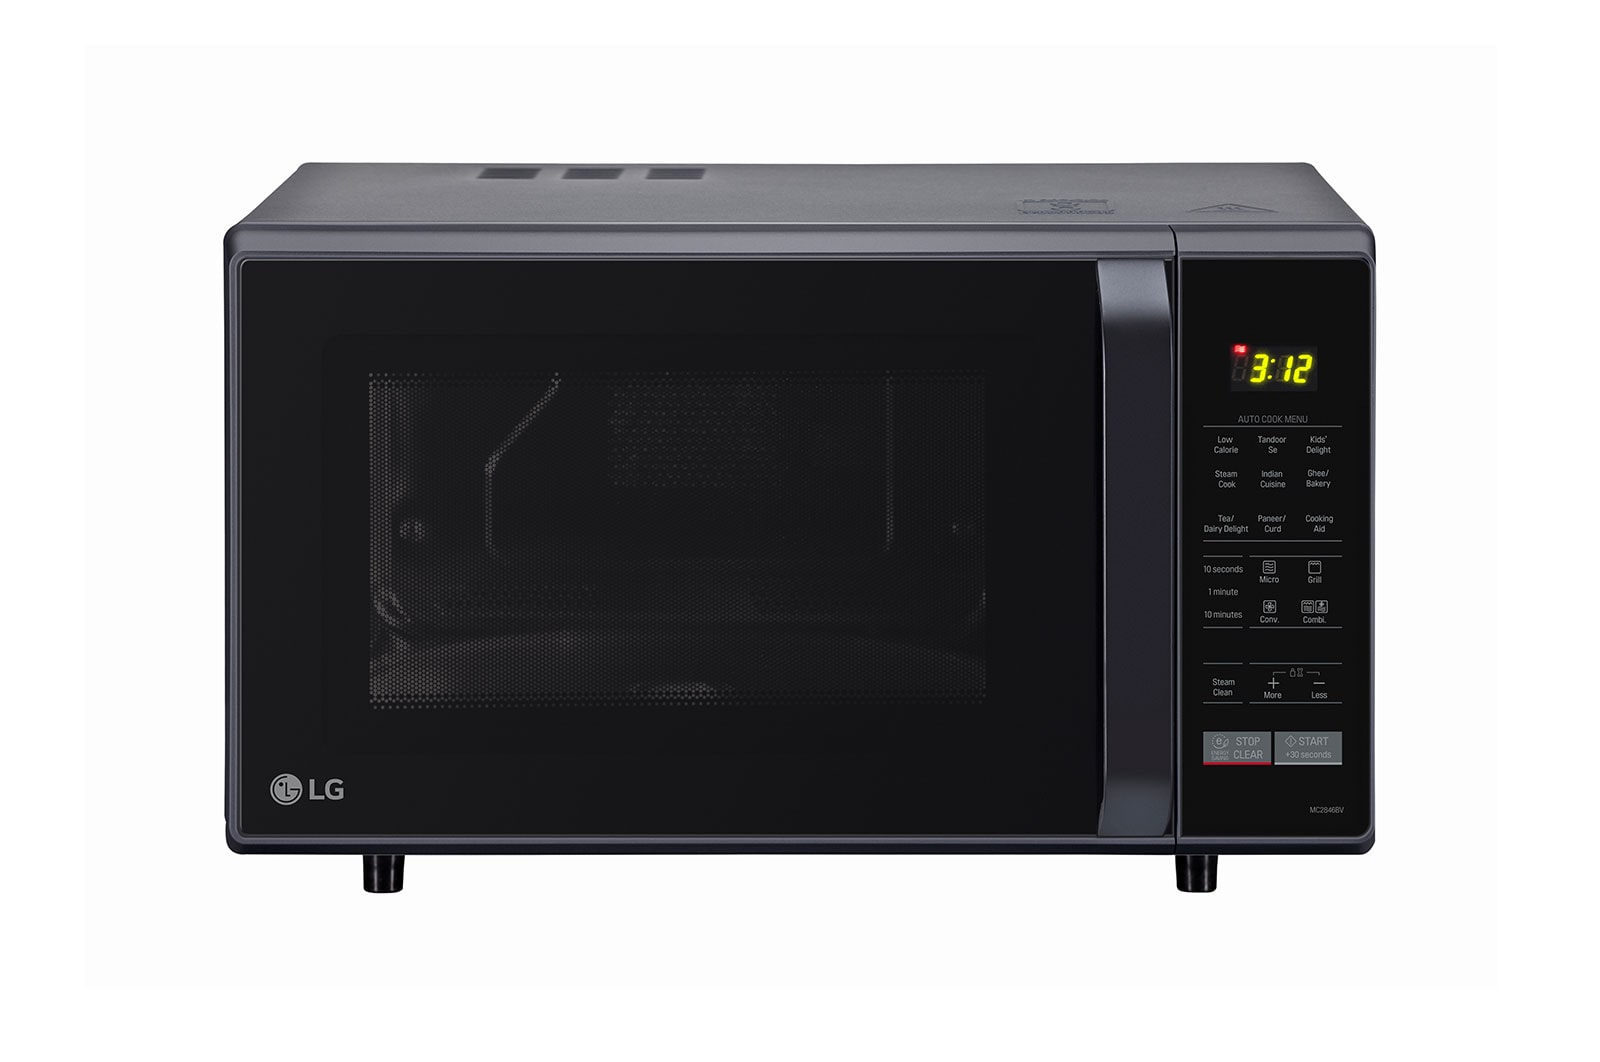 LG 28 L Convection Microwave Oven (MC2846BV, Black), MC2846BV